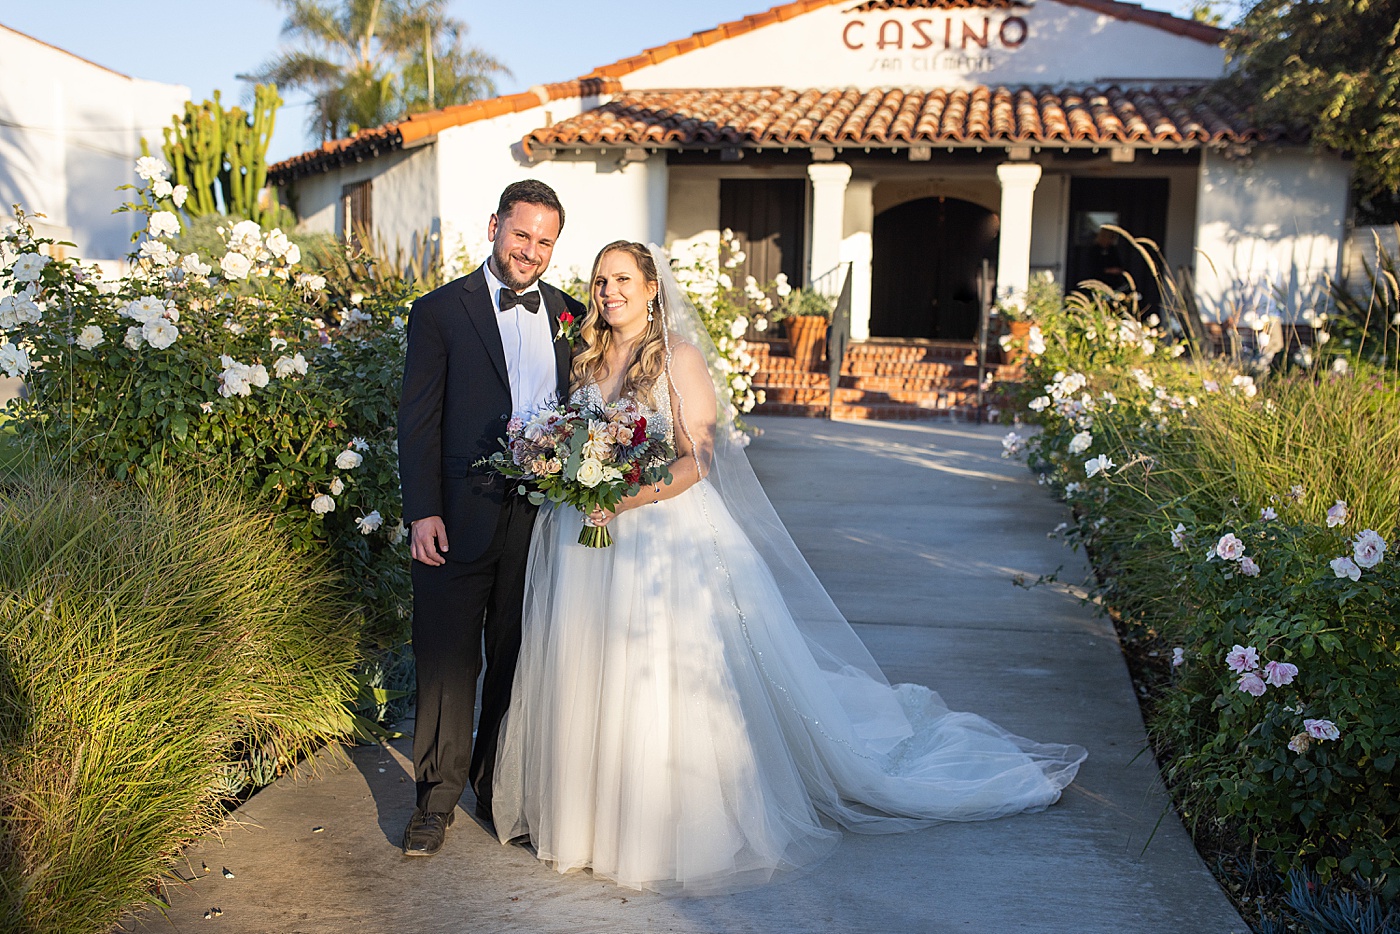 The Casino San Clemente beach wedding